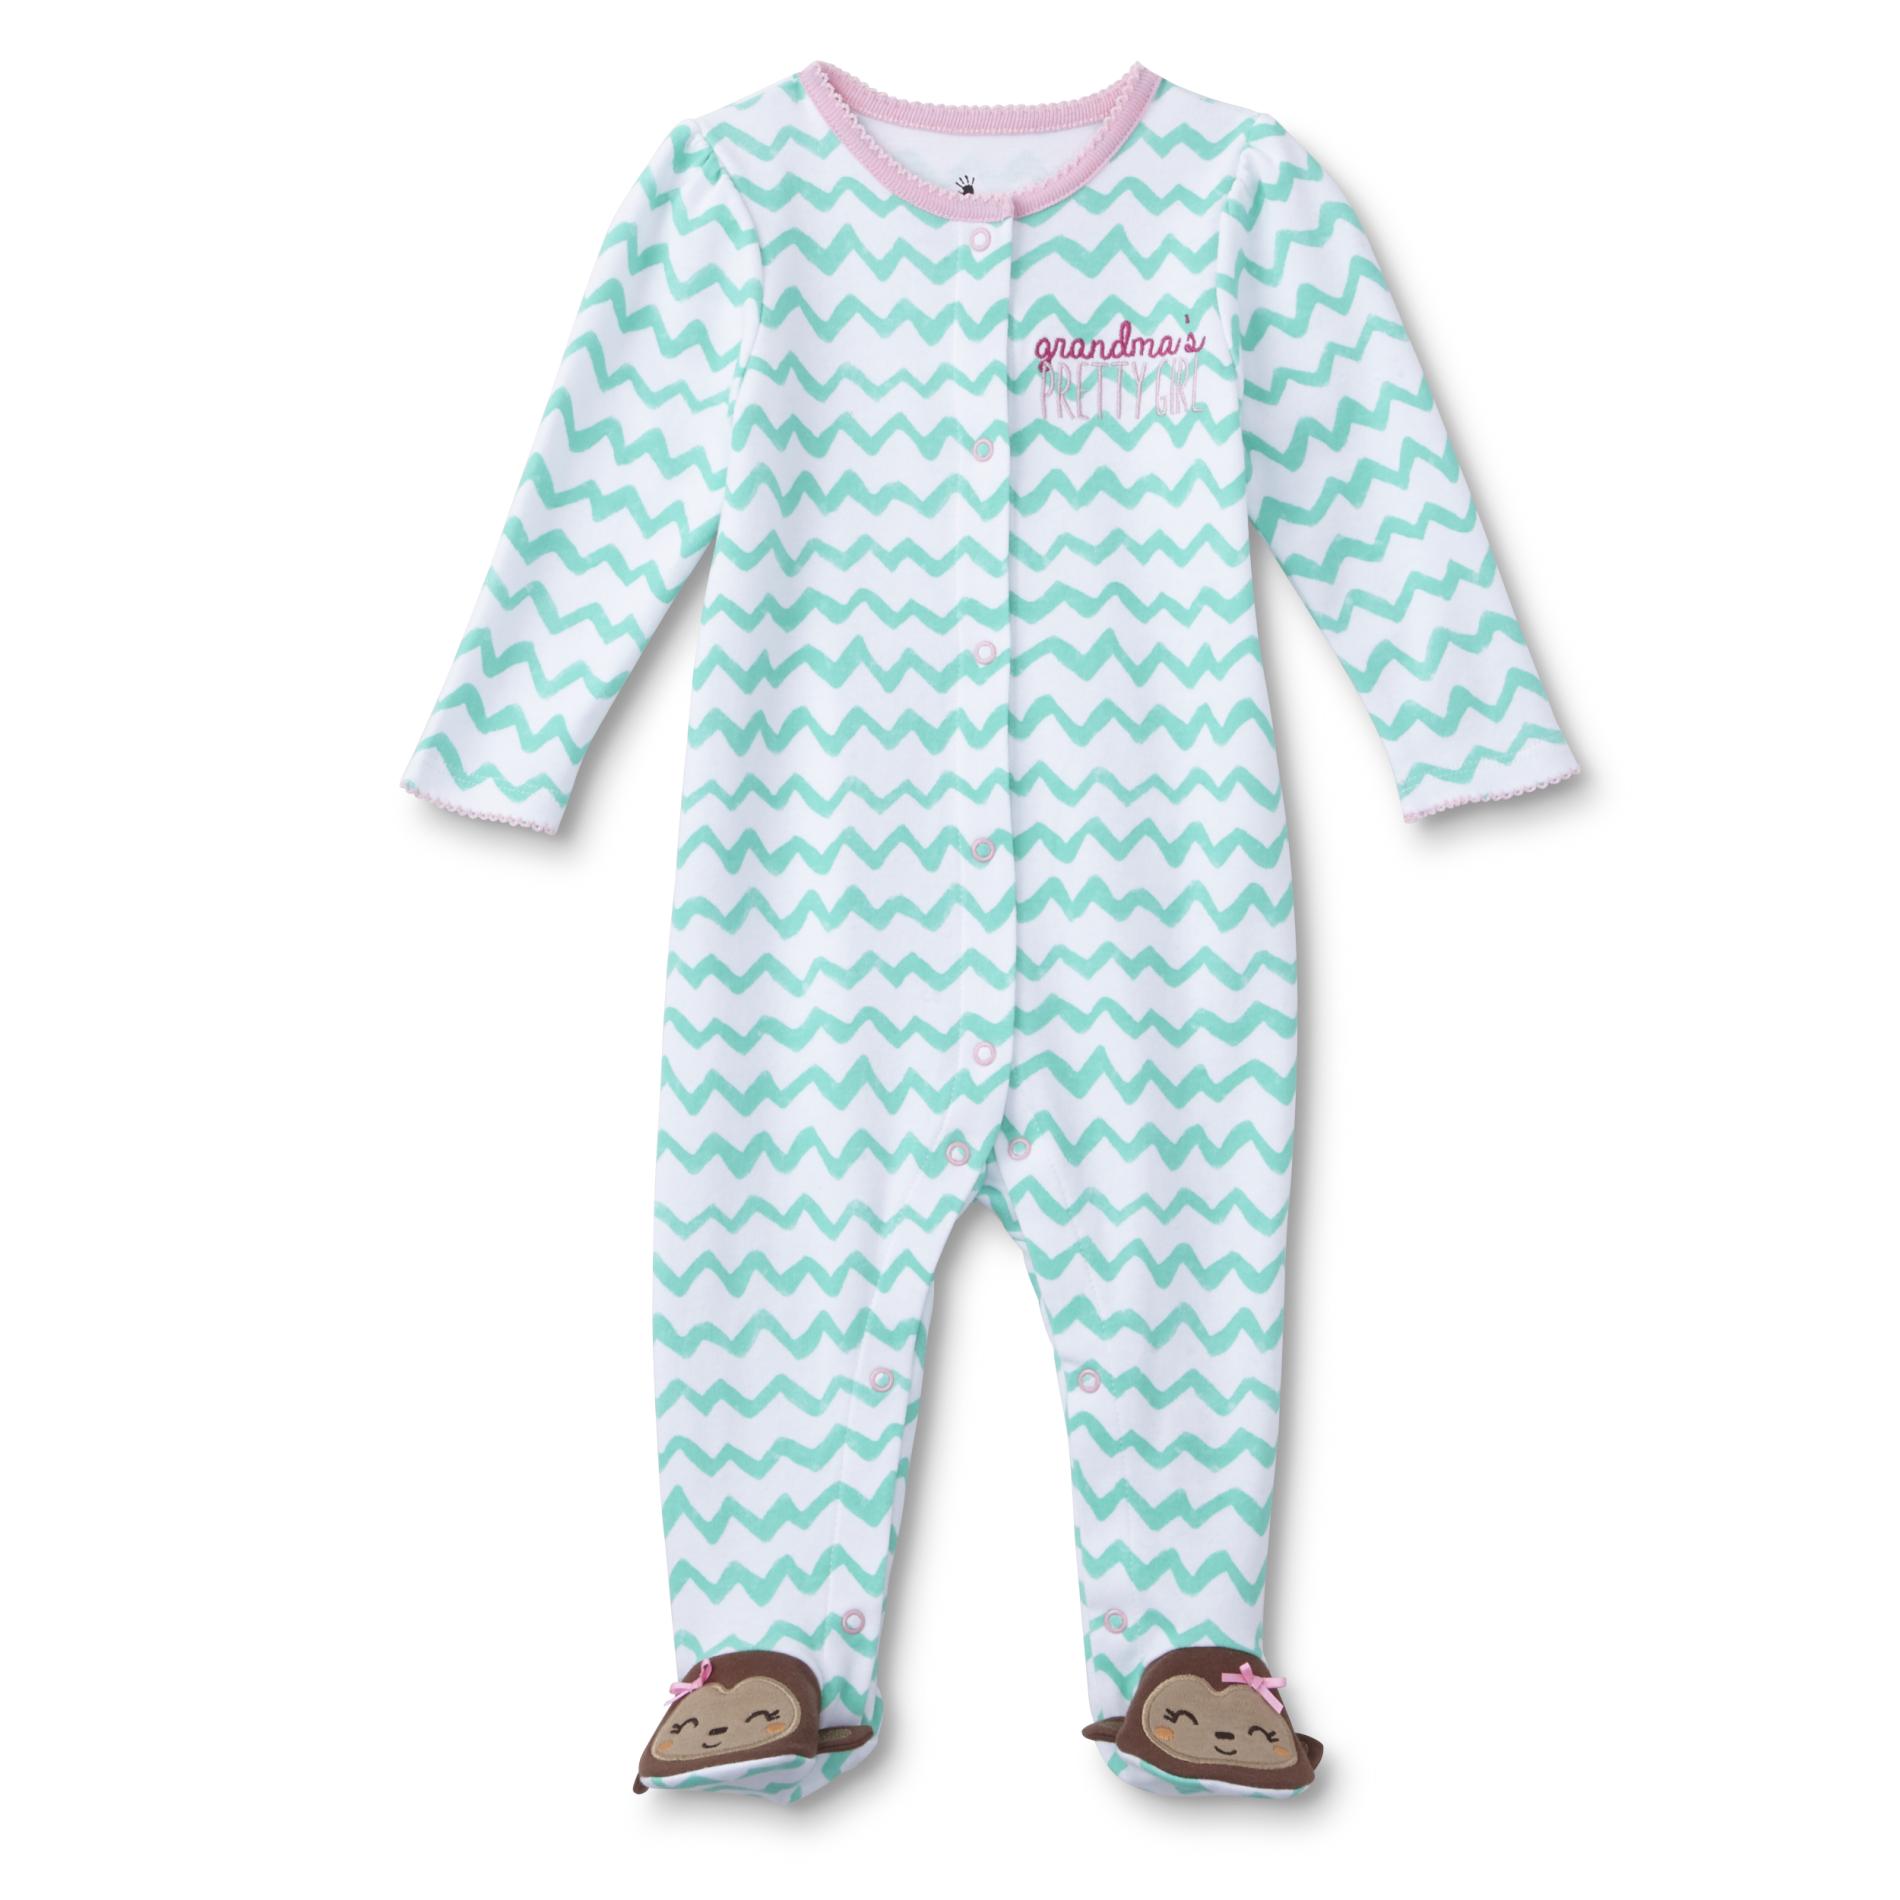 Small Wonders Newborn Girls' Footed Pajamas - Grandma's Pretty Girl